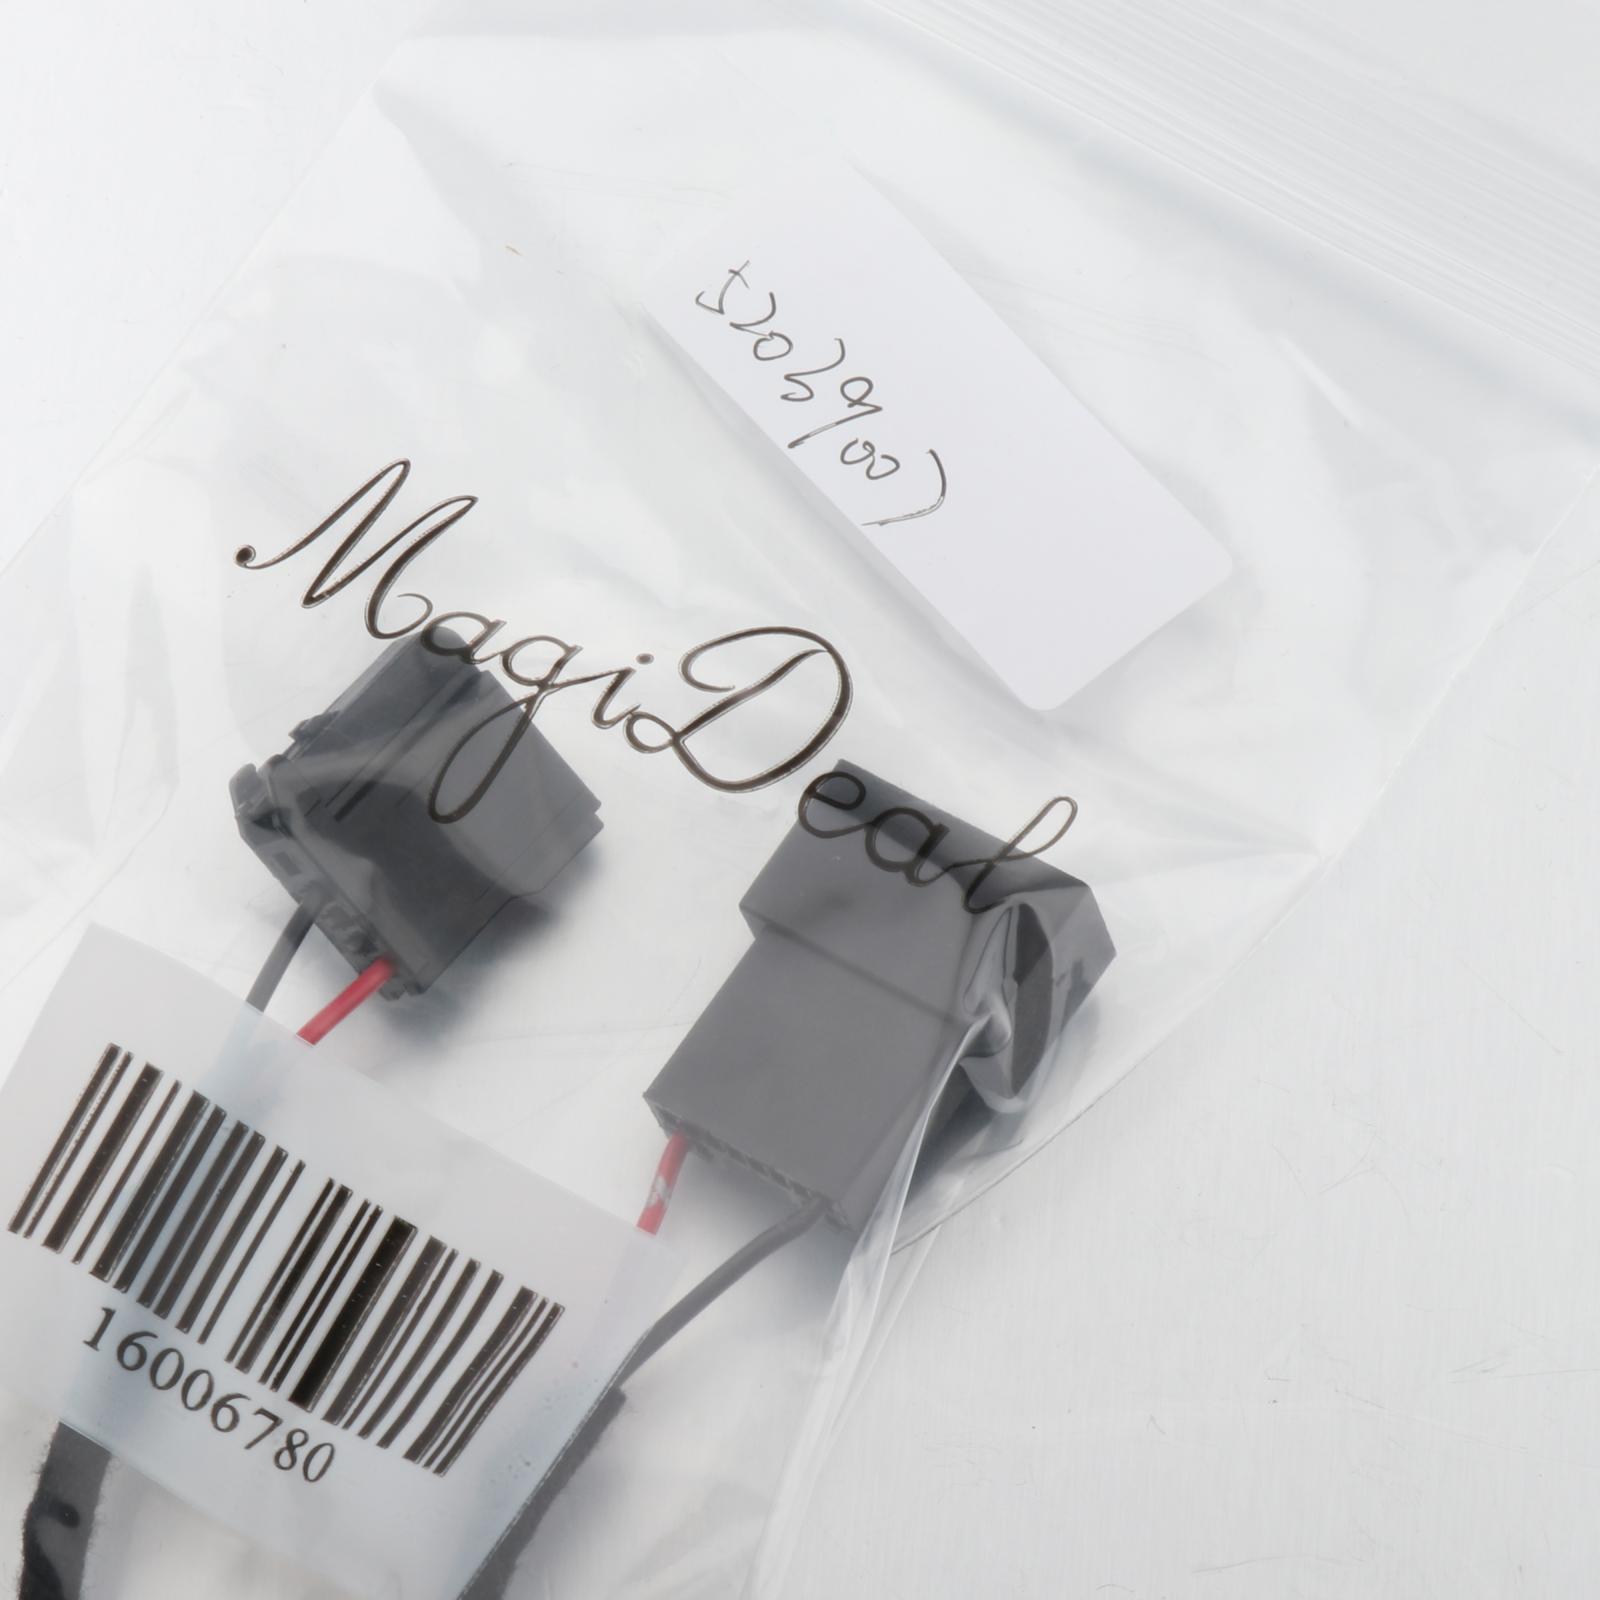 Wiring Adapter GEN 2a for Ford SYNC 2 Upgrade SYNC 3 Retrofit USB Media HUB